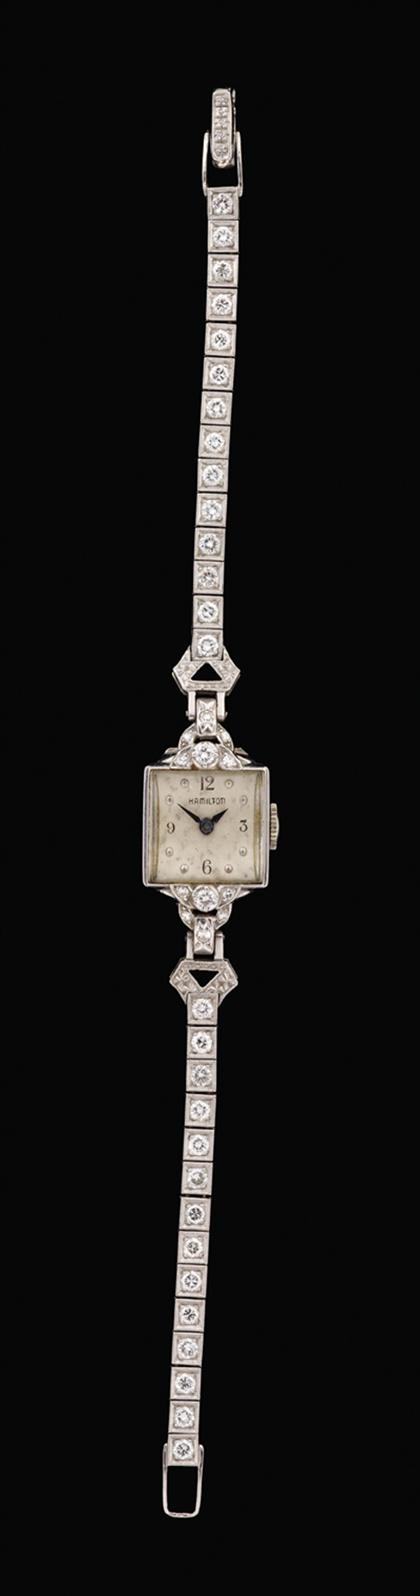 Lady s platinum and diamond wristwatch  4bdbf